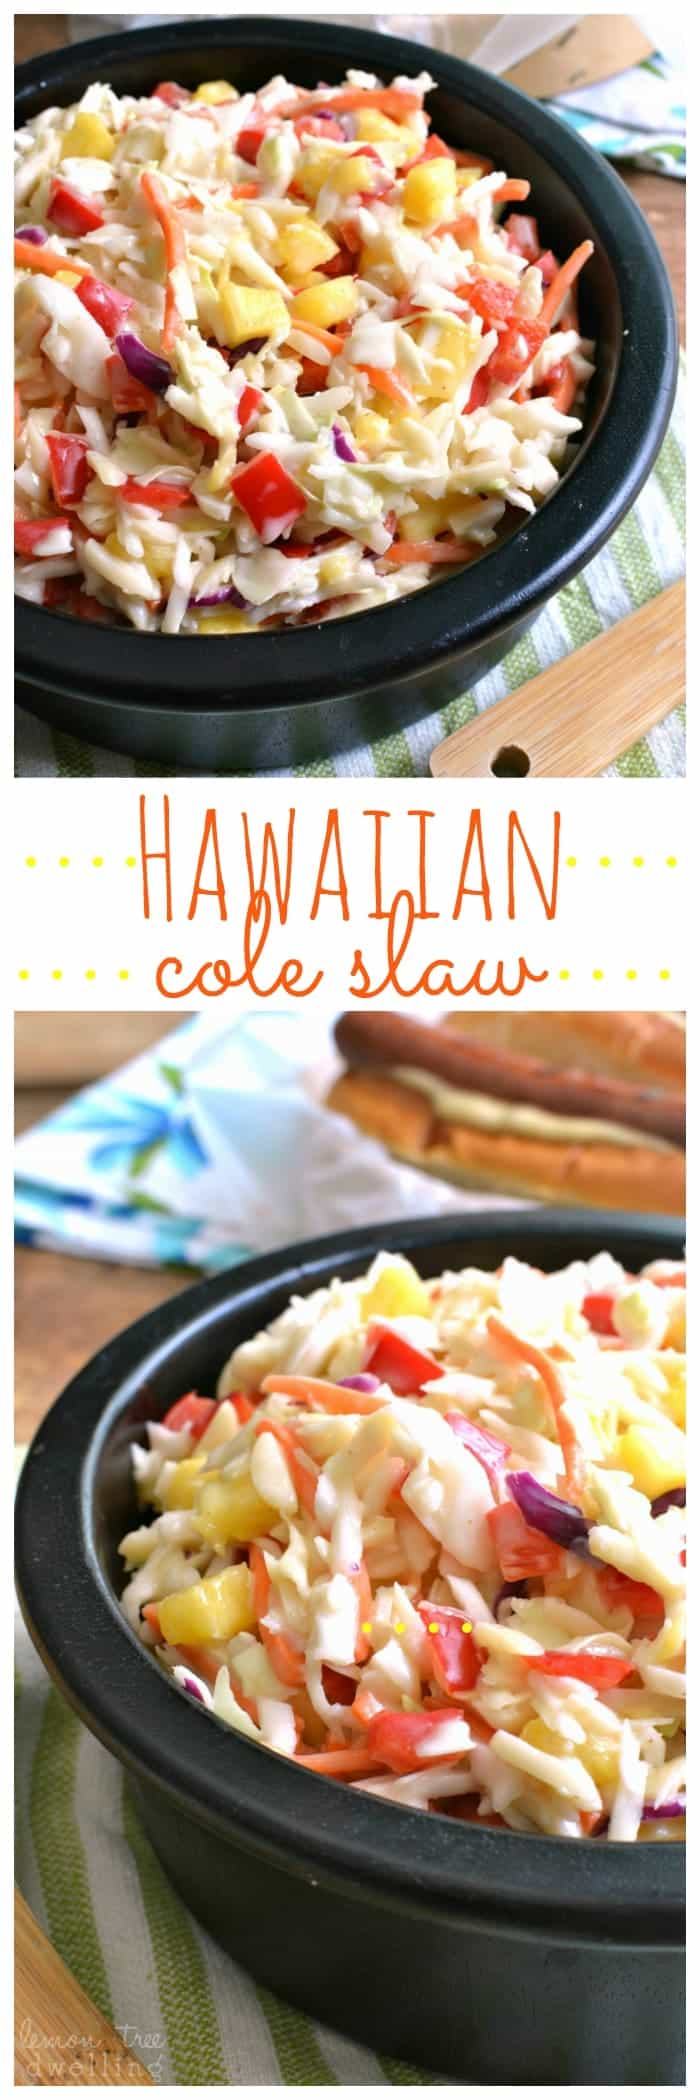 Hawaiian Cole Slaw and Ball Park Park's Finest hot dogs - the perfect summer pairing! #FinestGrillathon #ad @BallParkBrand